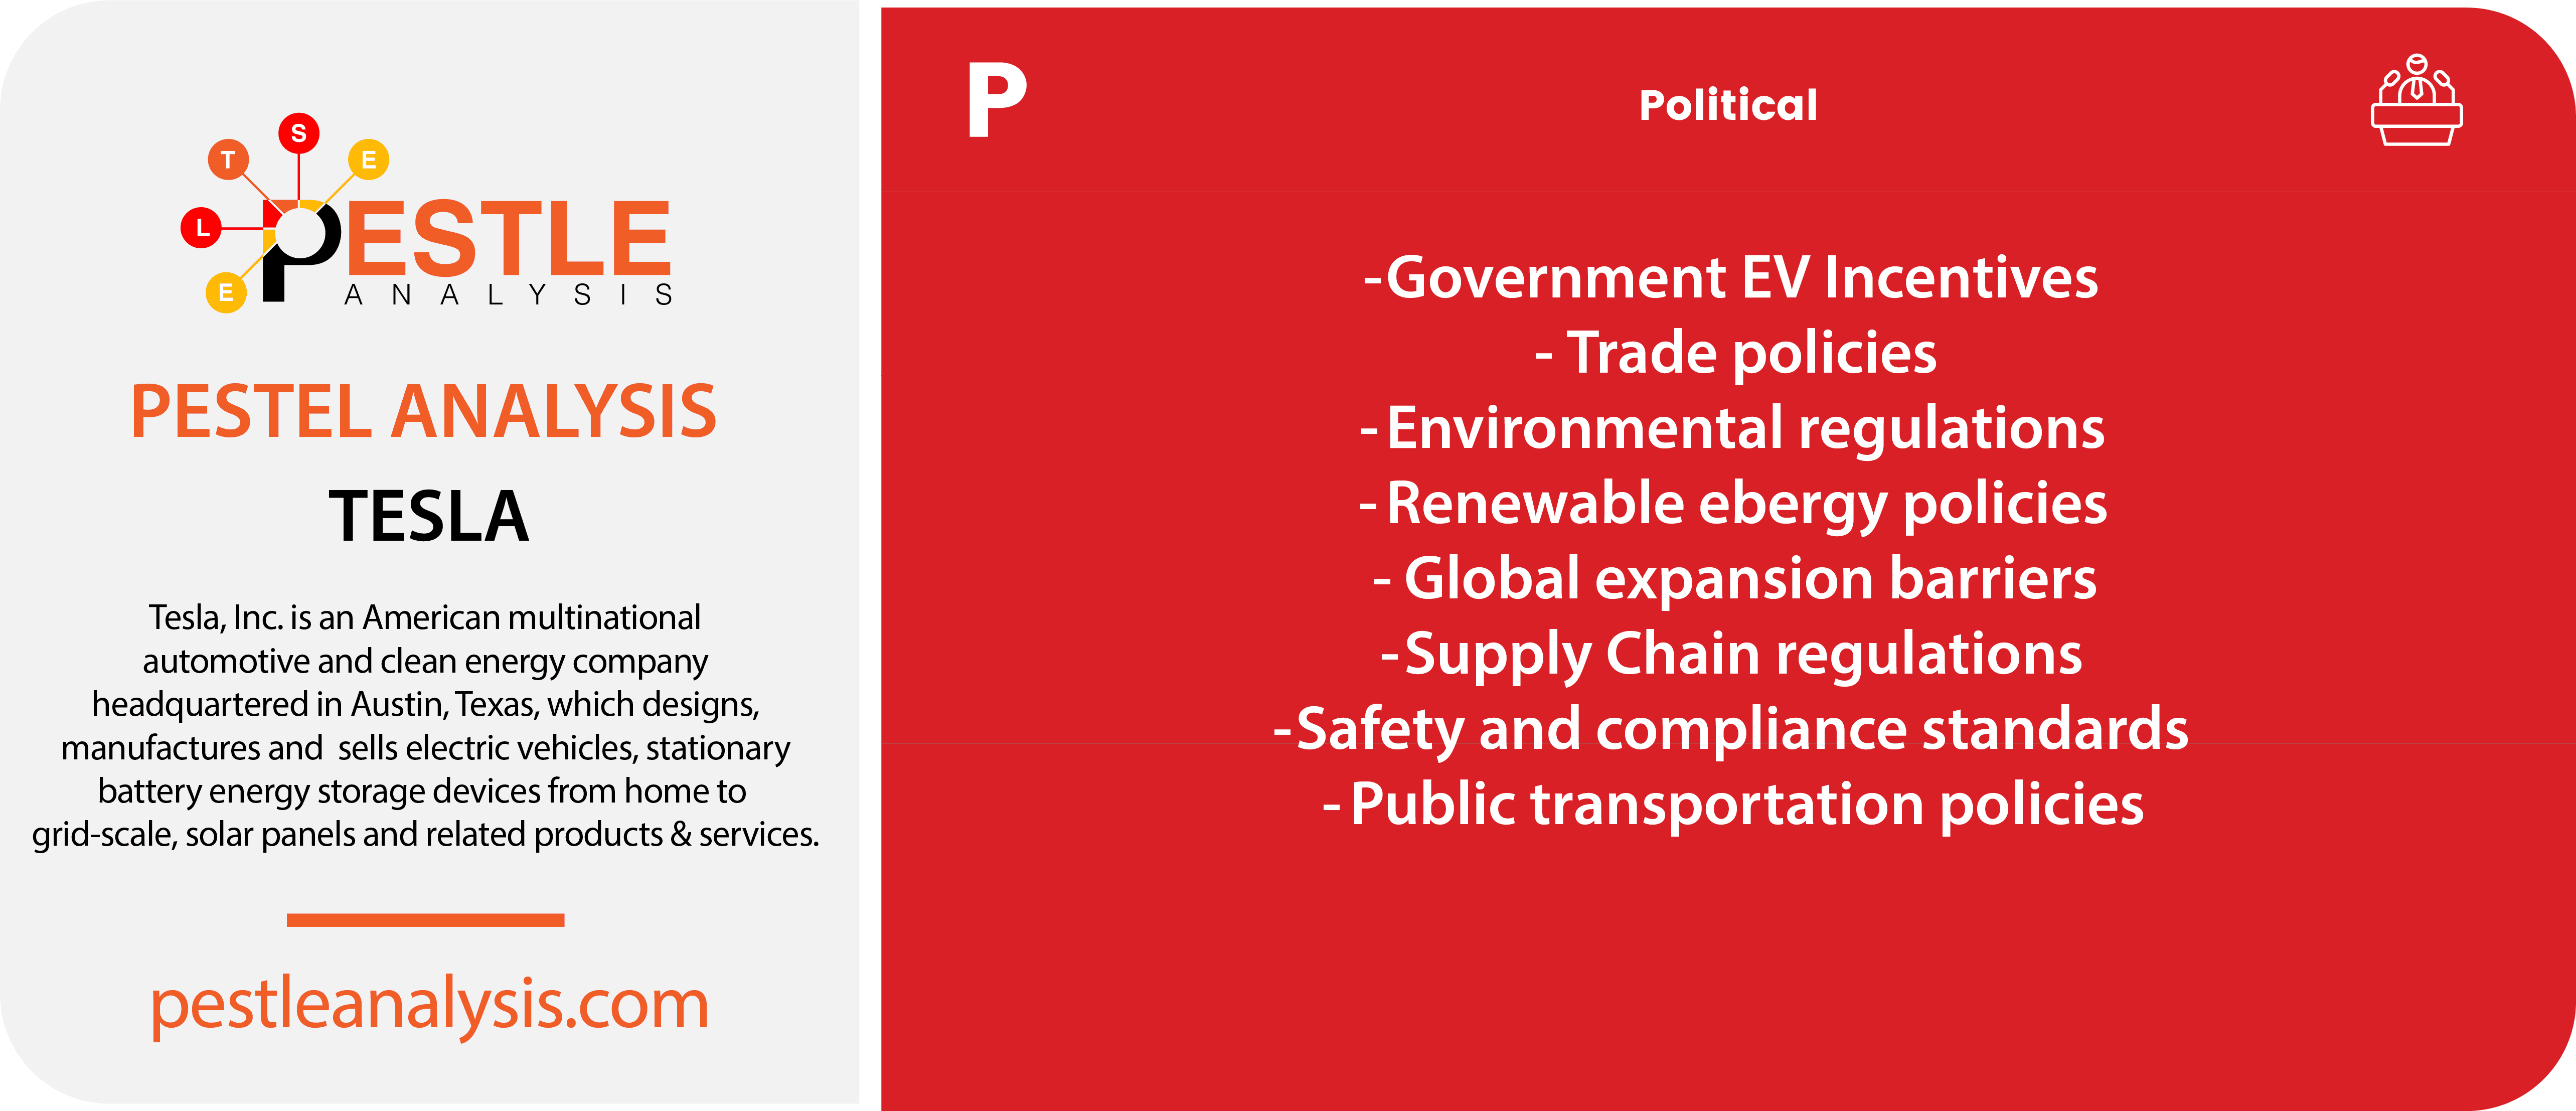 tesla-pestle-analysis-political-factors-template